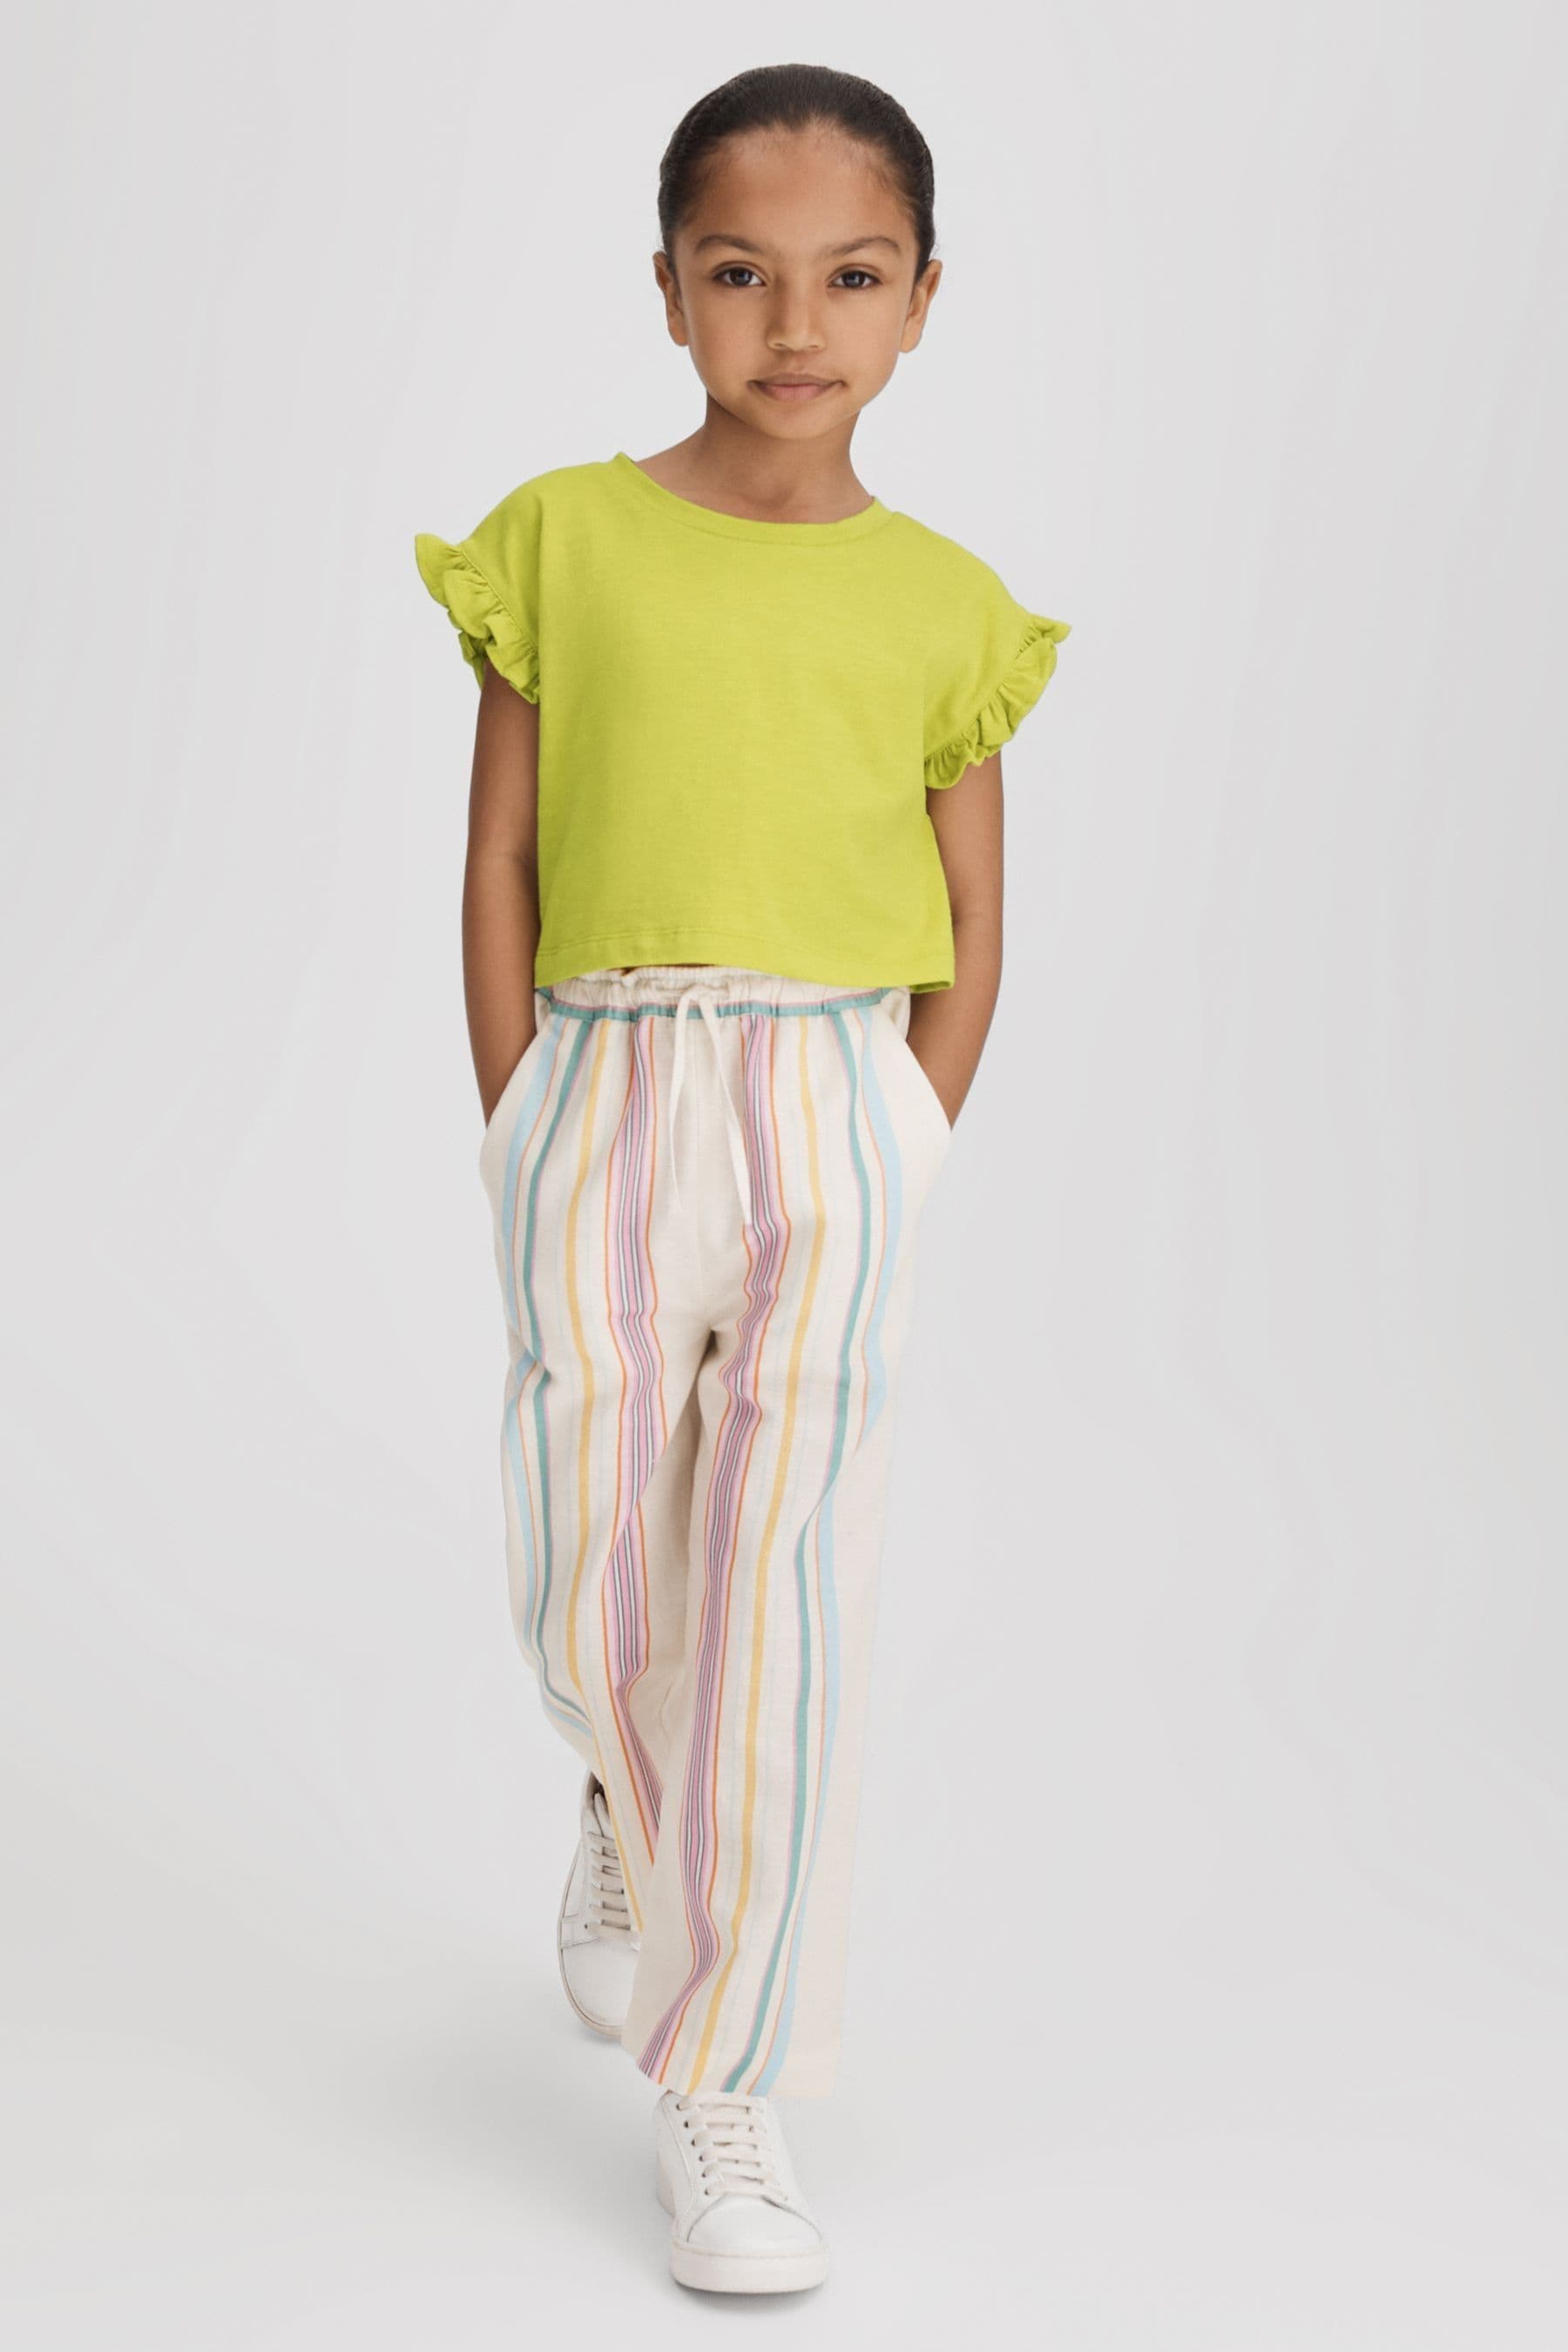 Reiss Kids' Saskia - Lime Senior Ruffle Sleeve Cropped T-shirt, Uk 12-13 Yrs